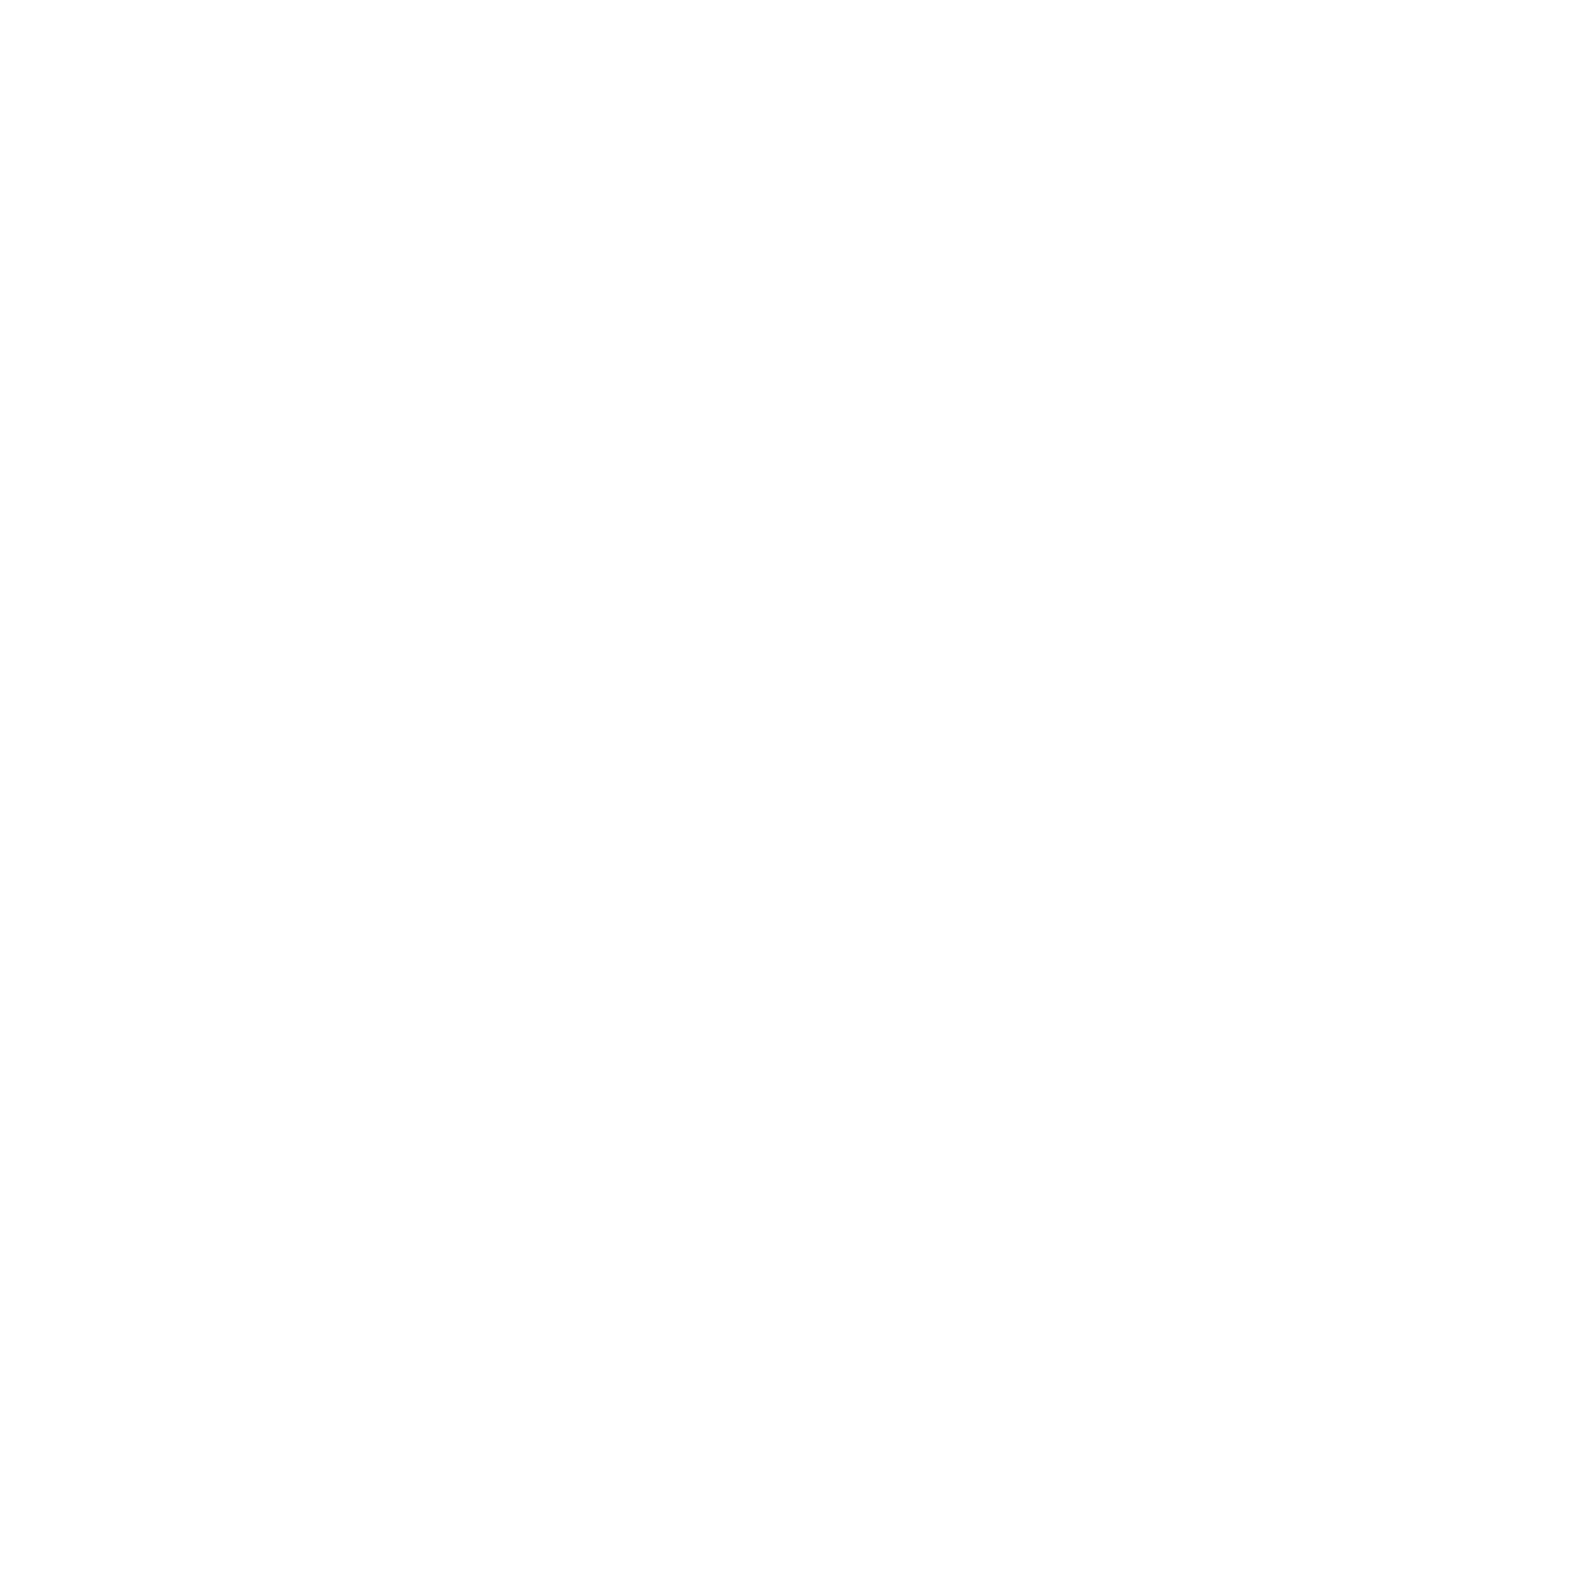 KLX Energy Services logo for dark backgrounds (transparent PNG)